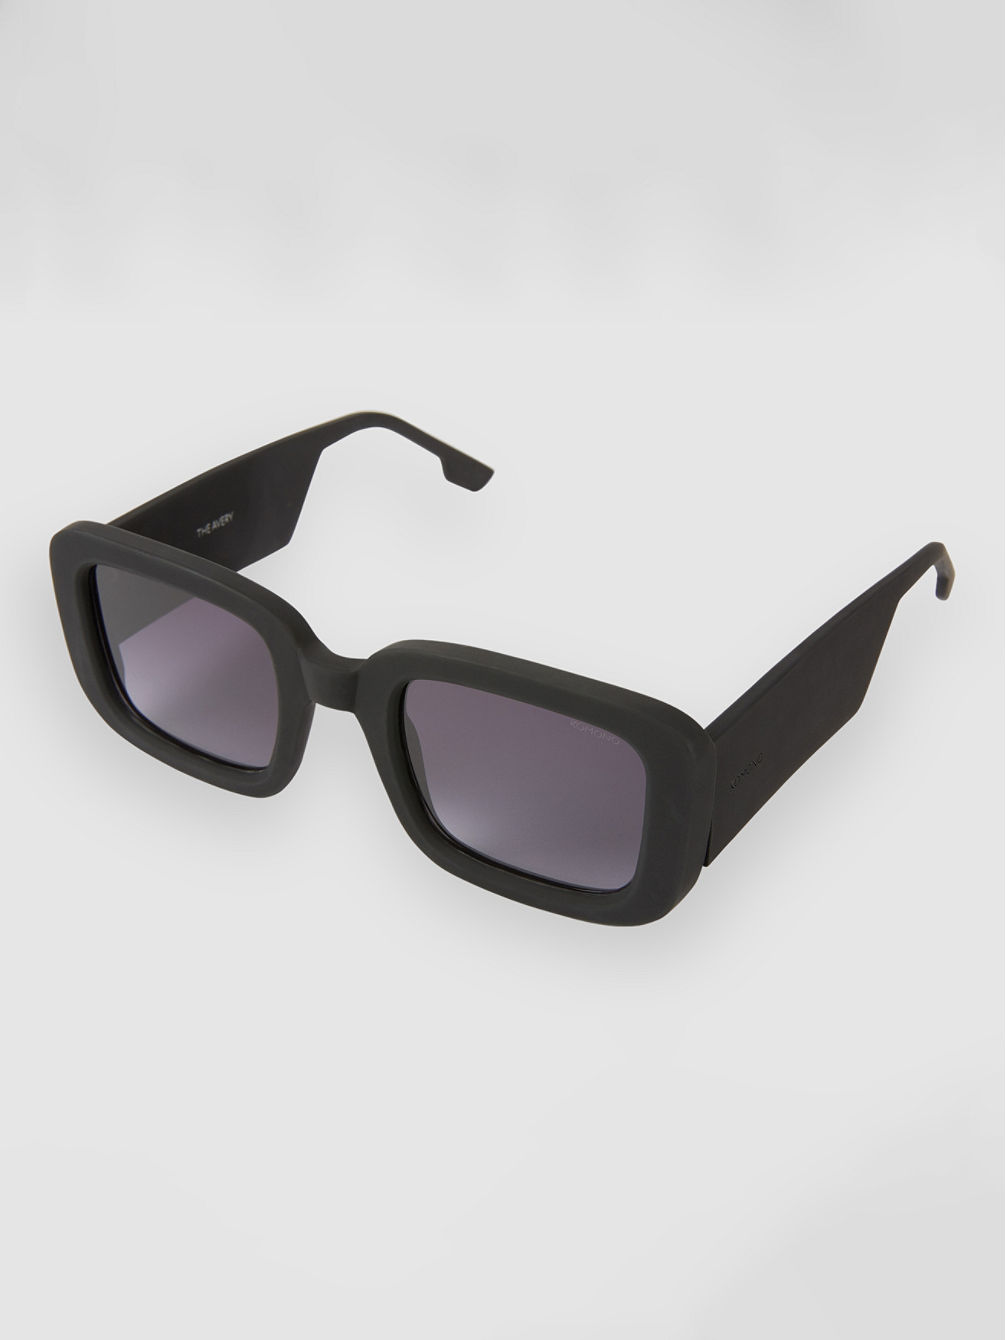 Avery Carbon Sunglasses